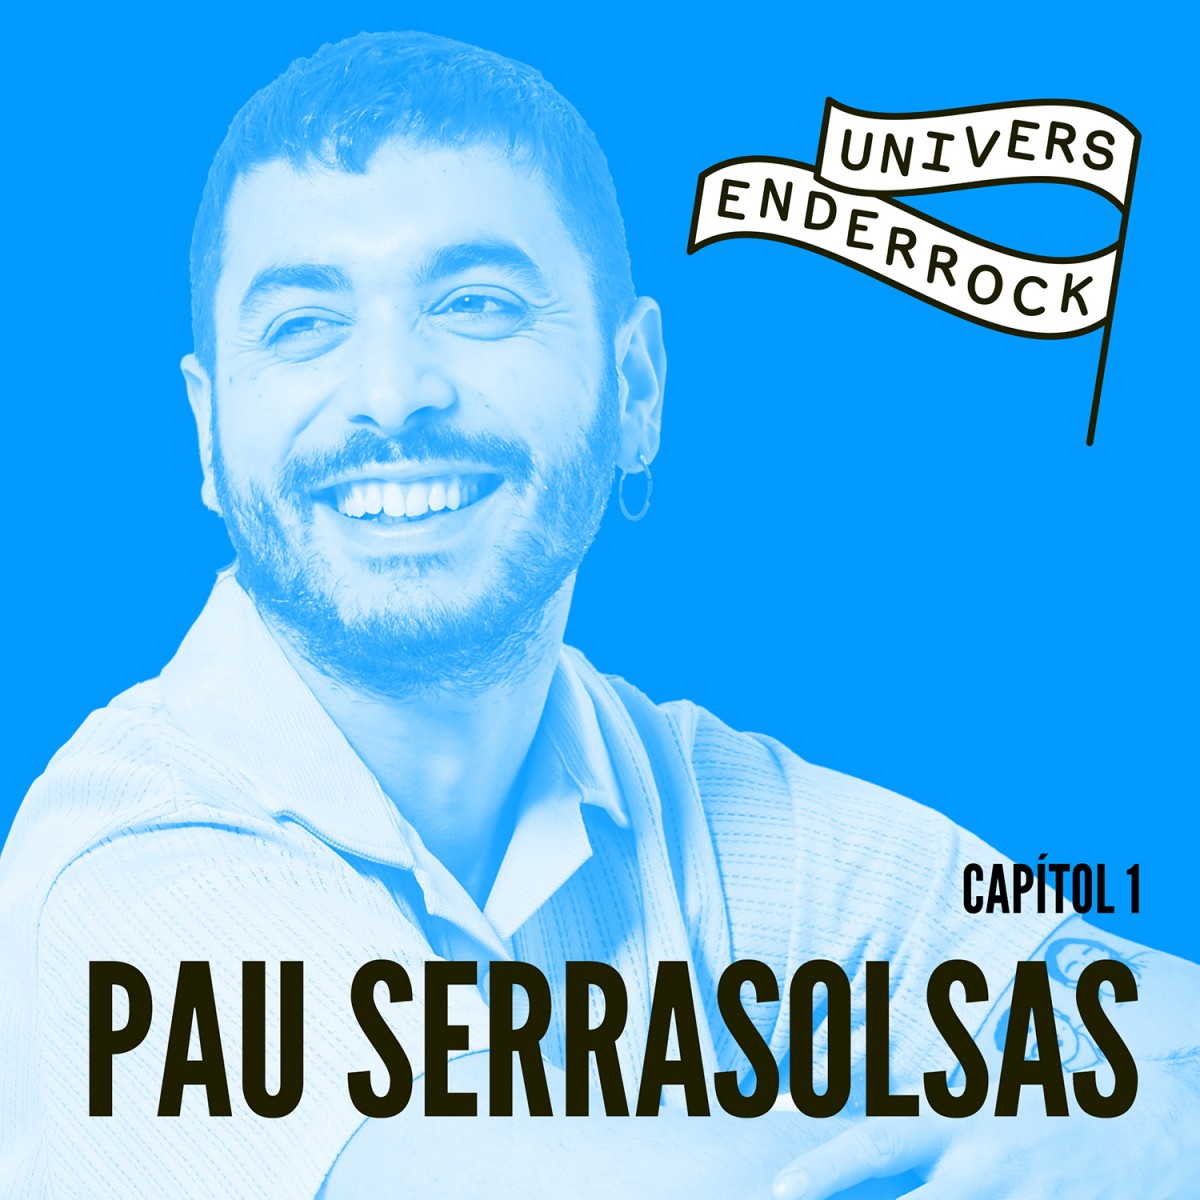 Primer episodi d''Univers Enderrock' amb Pau Serrasolsas (Ginestà)